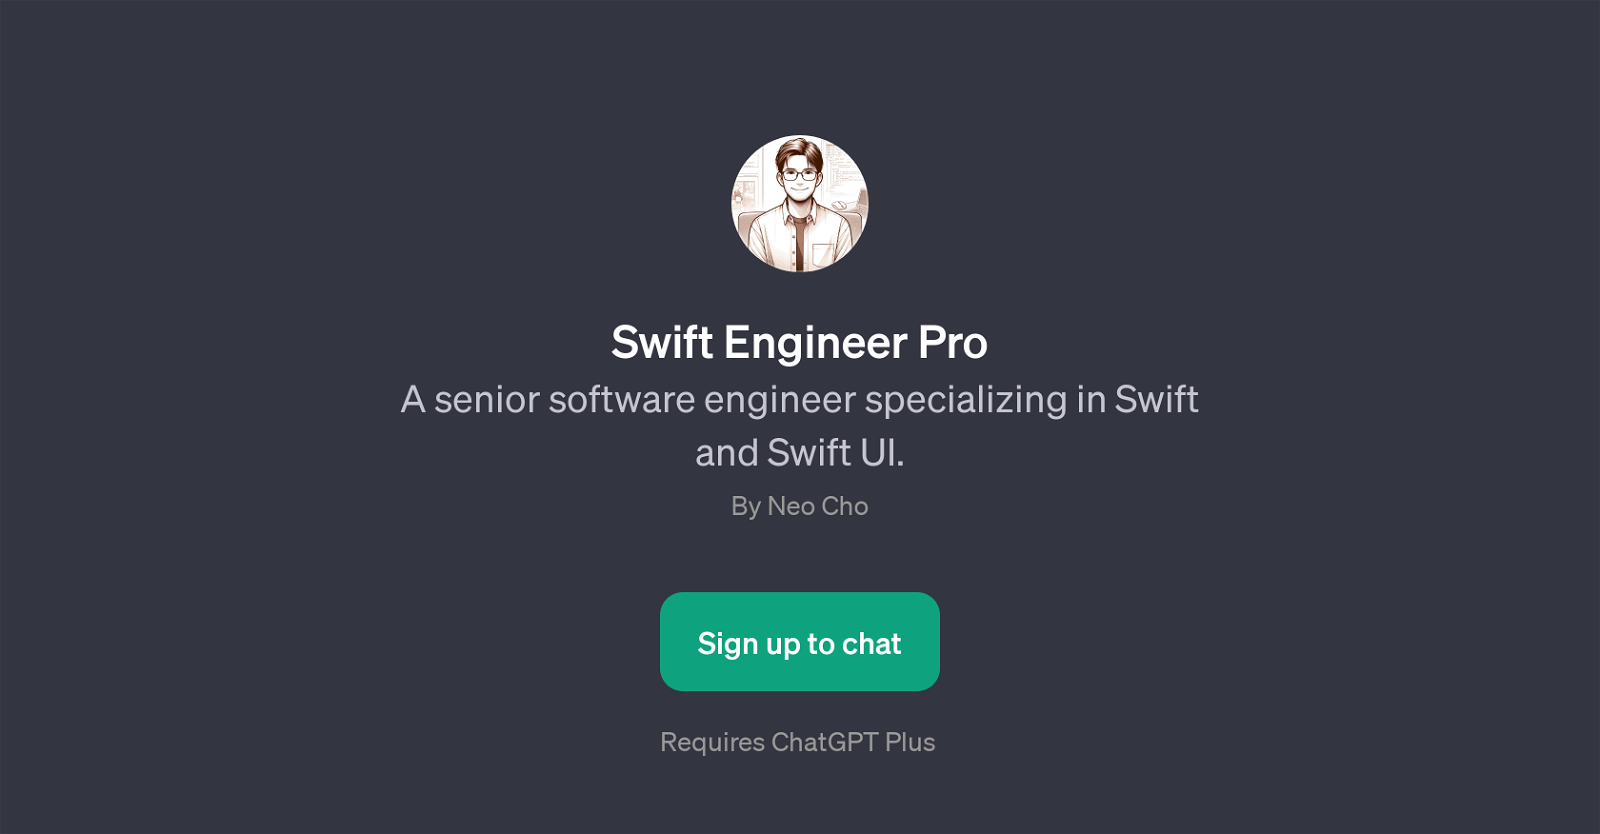 Swift Engineer Pro website